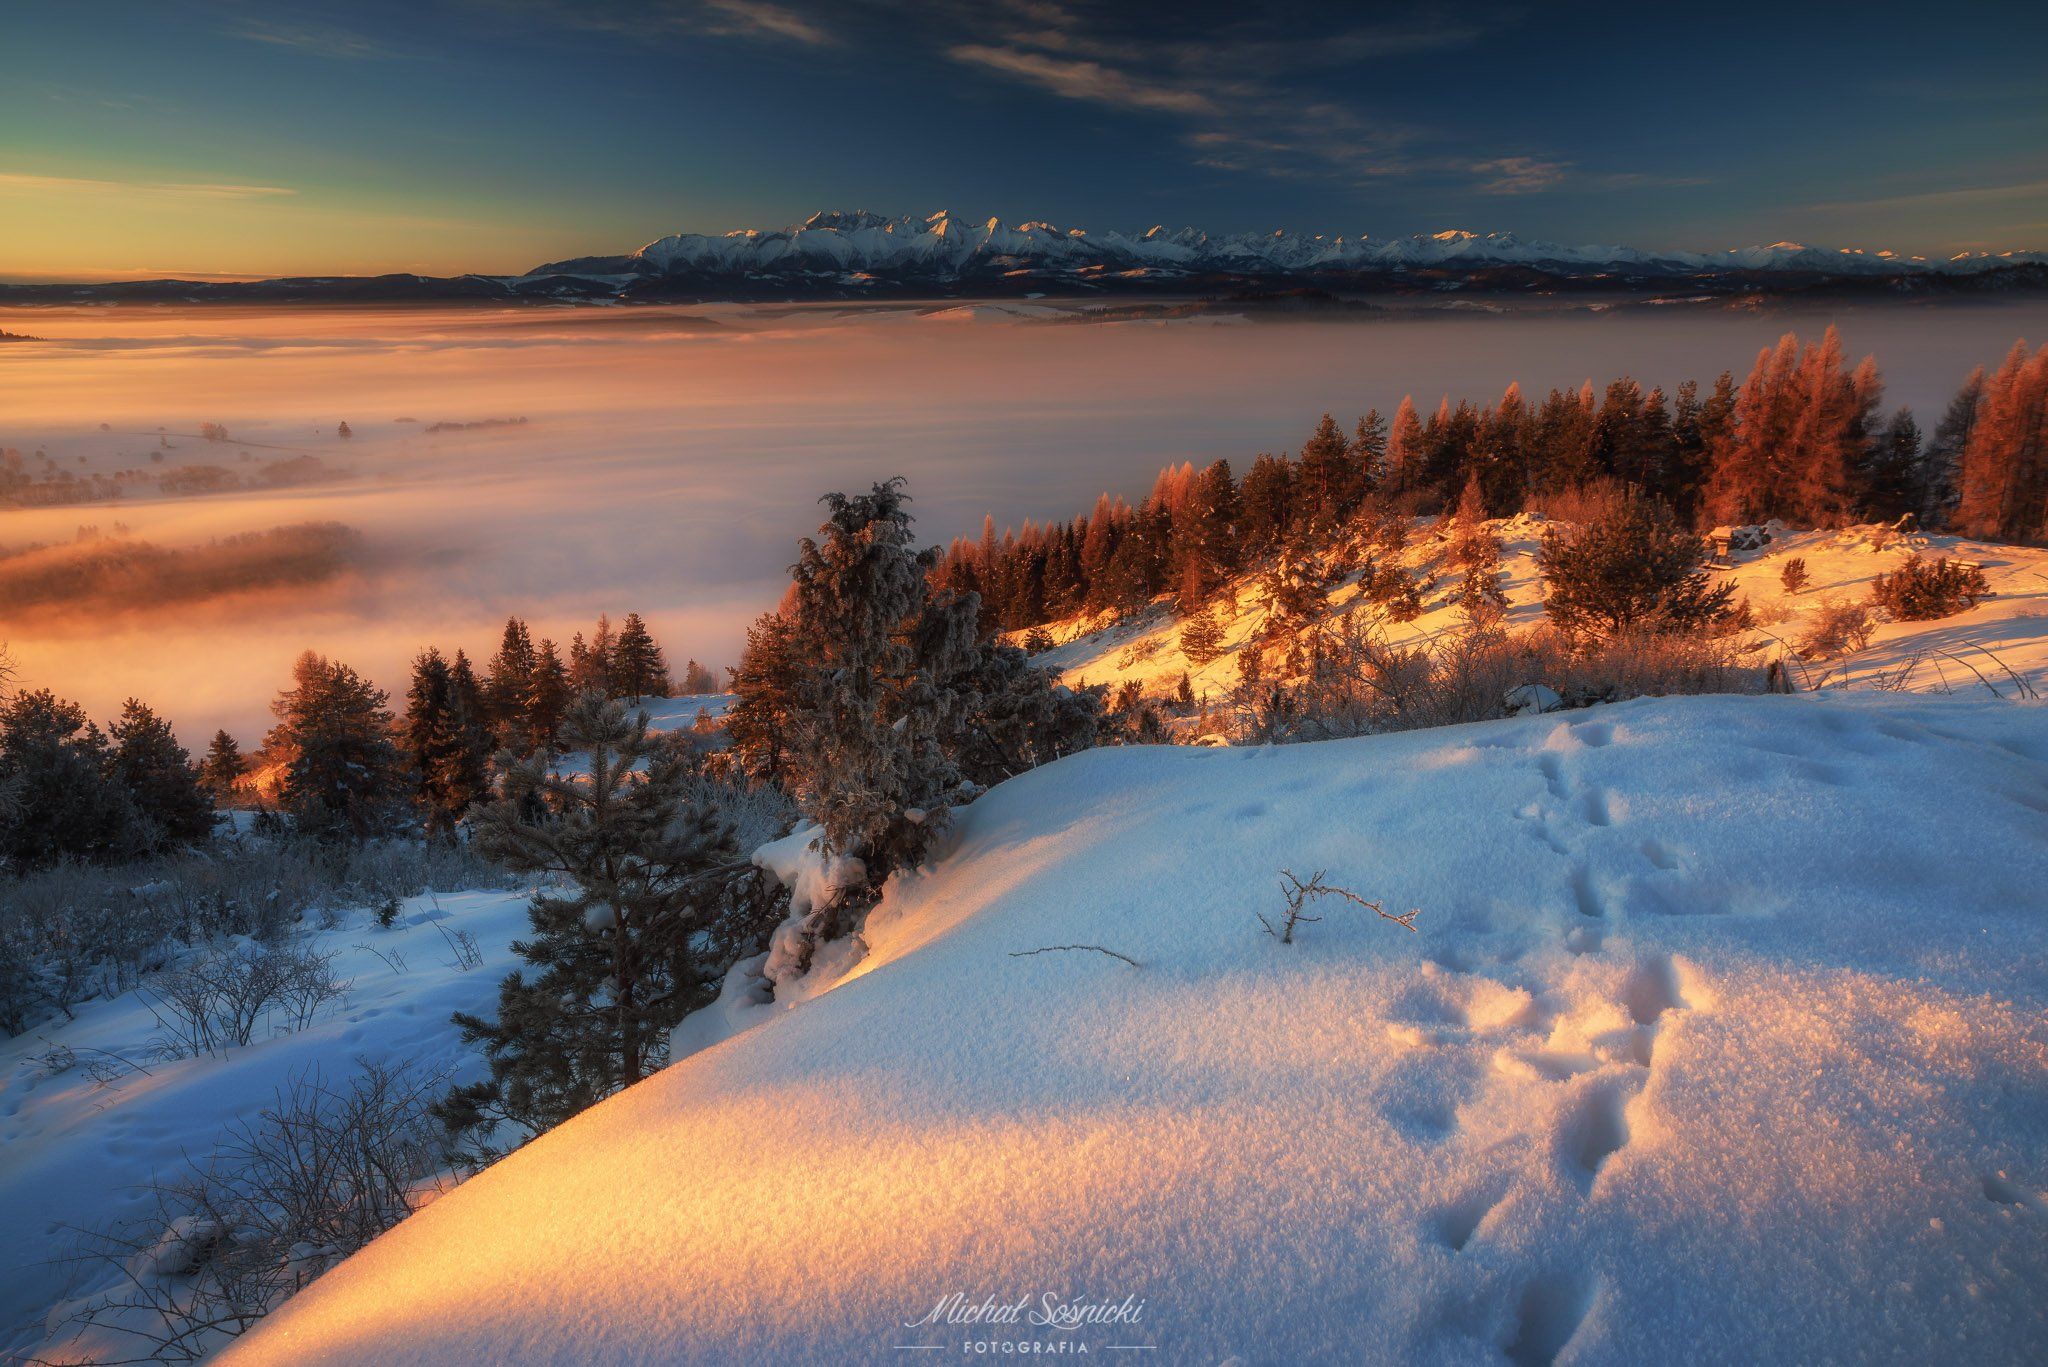 #poland #mountains #winter #snow #rock #sunrise #best #nature #benro #benq #pentax, Michał Sośnicki